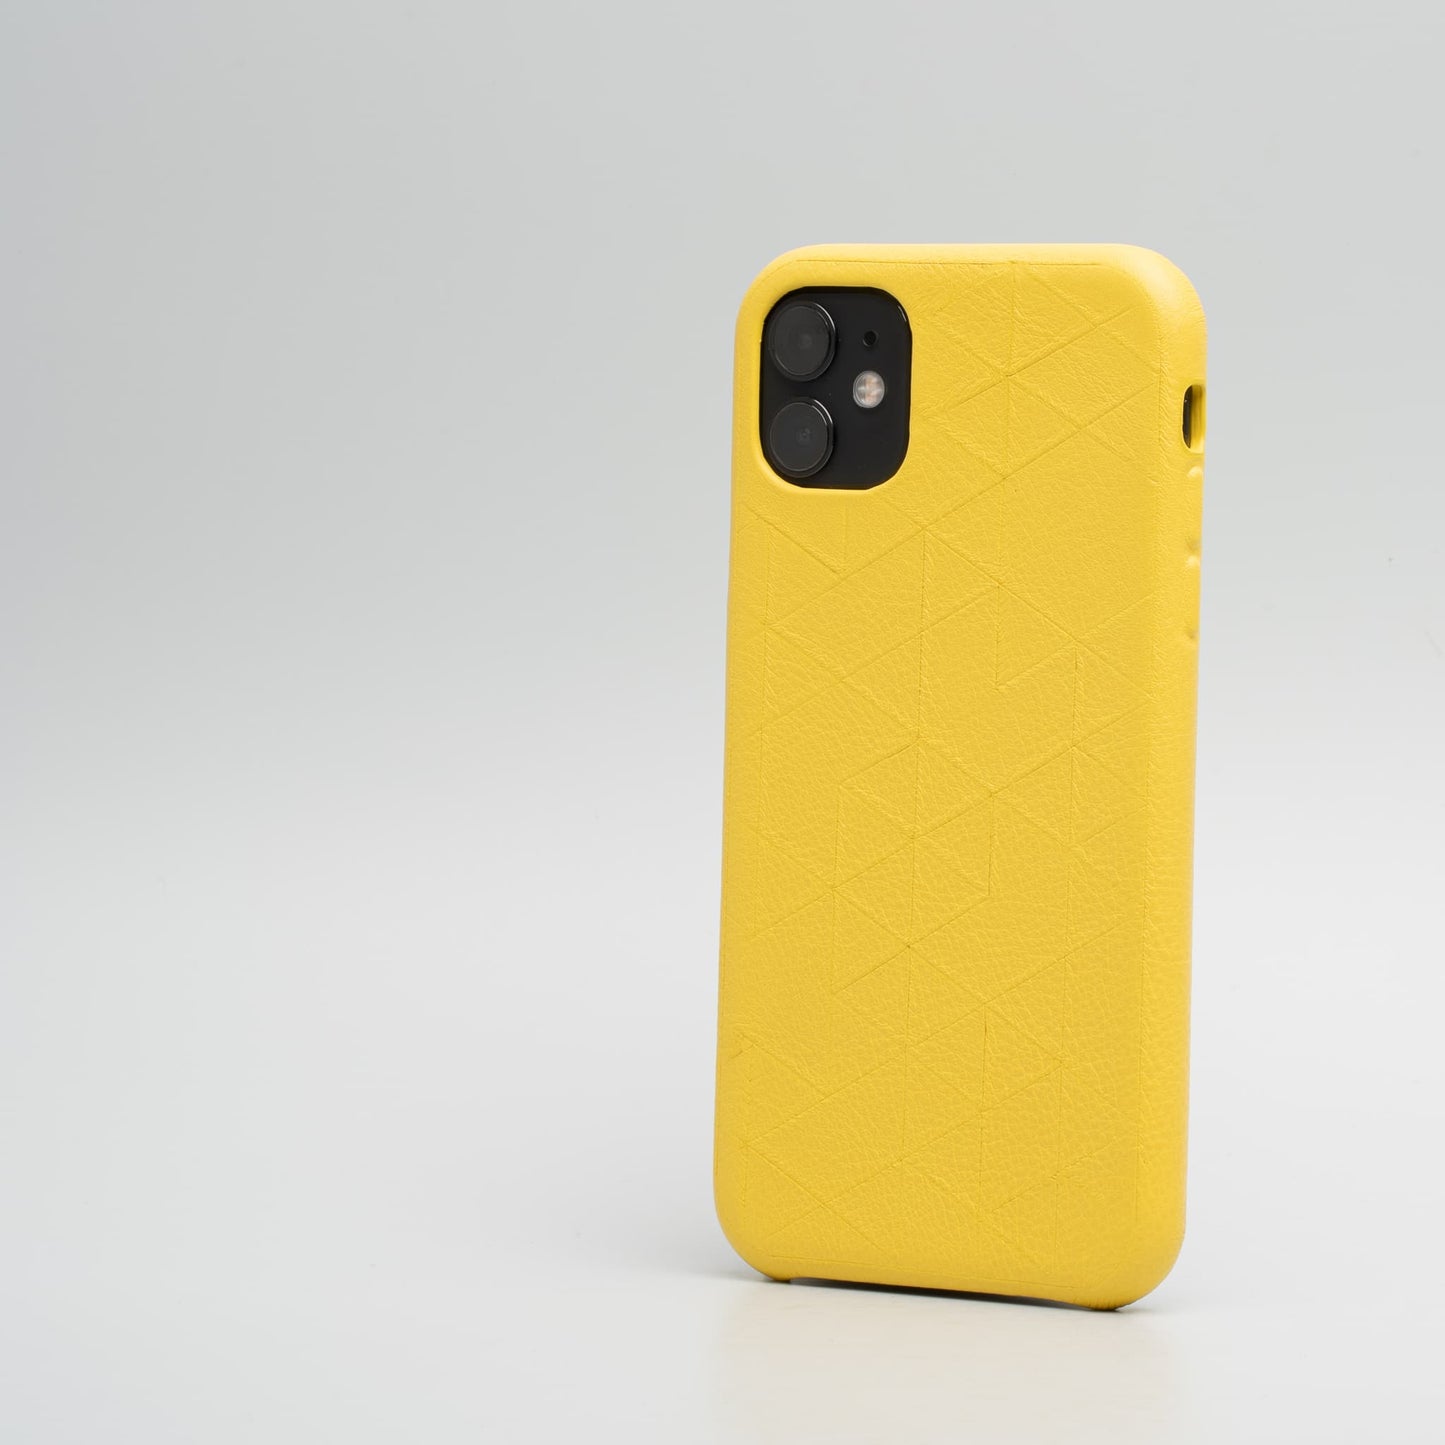 yellow iPhone 11 case